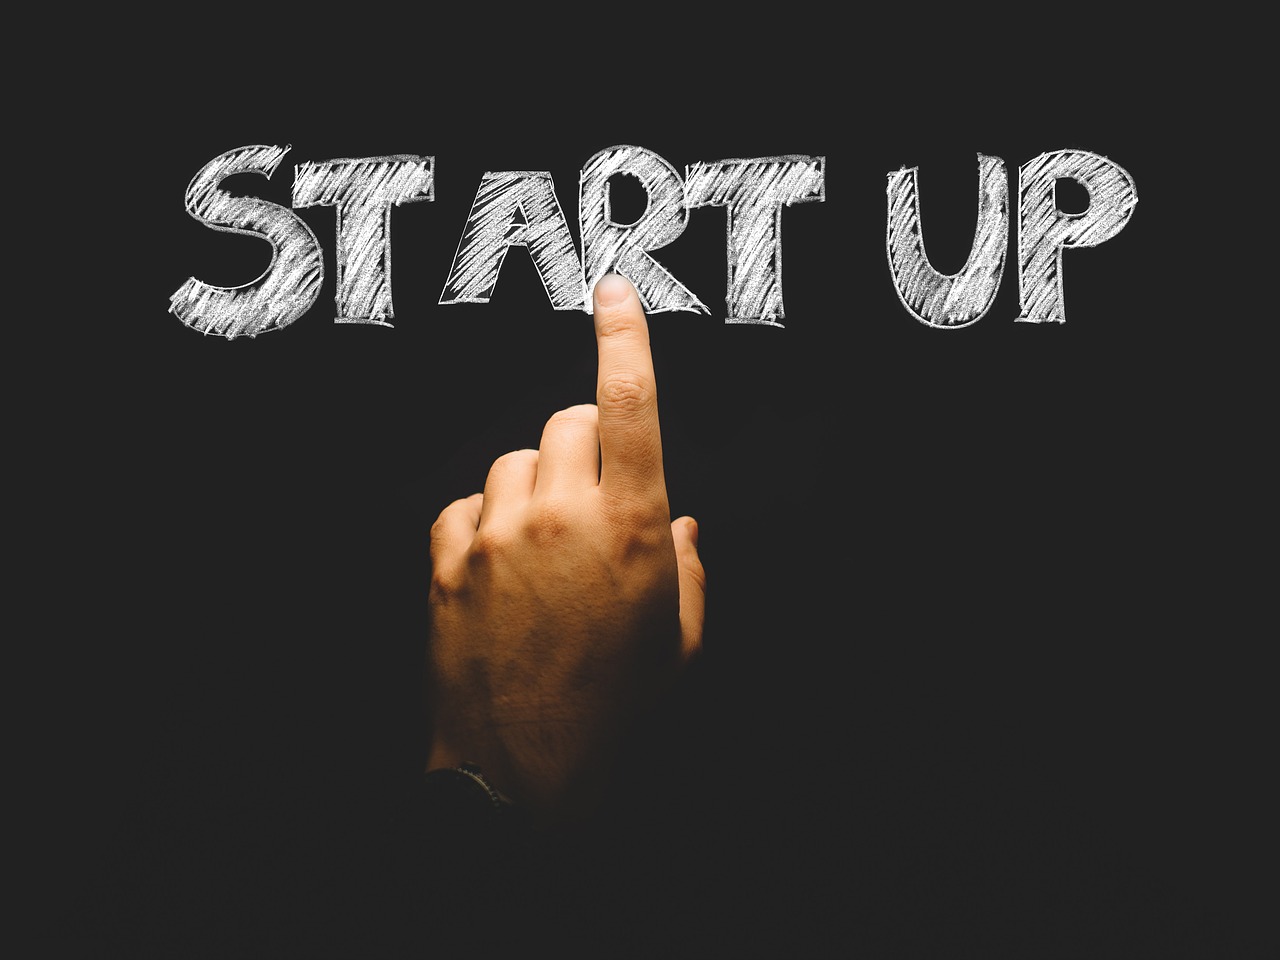 start start up startup free photo